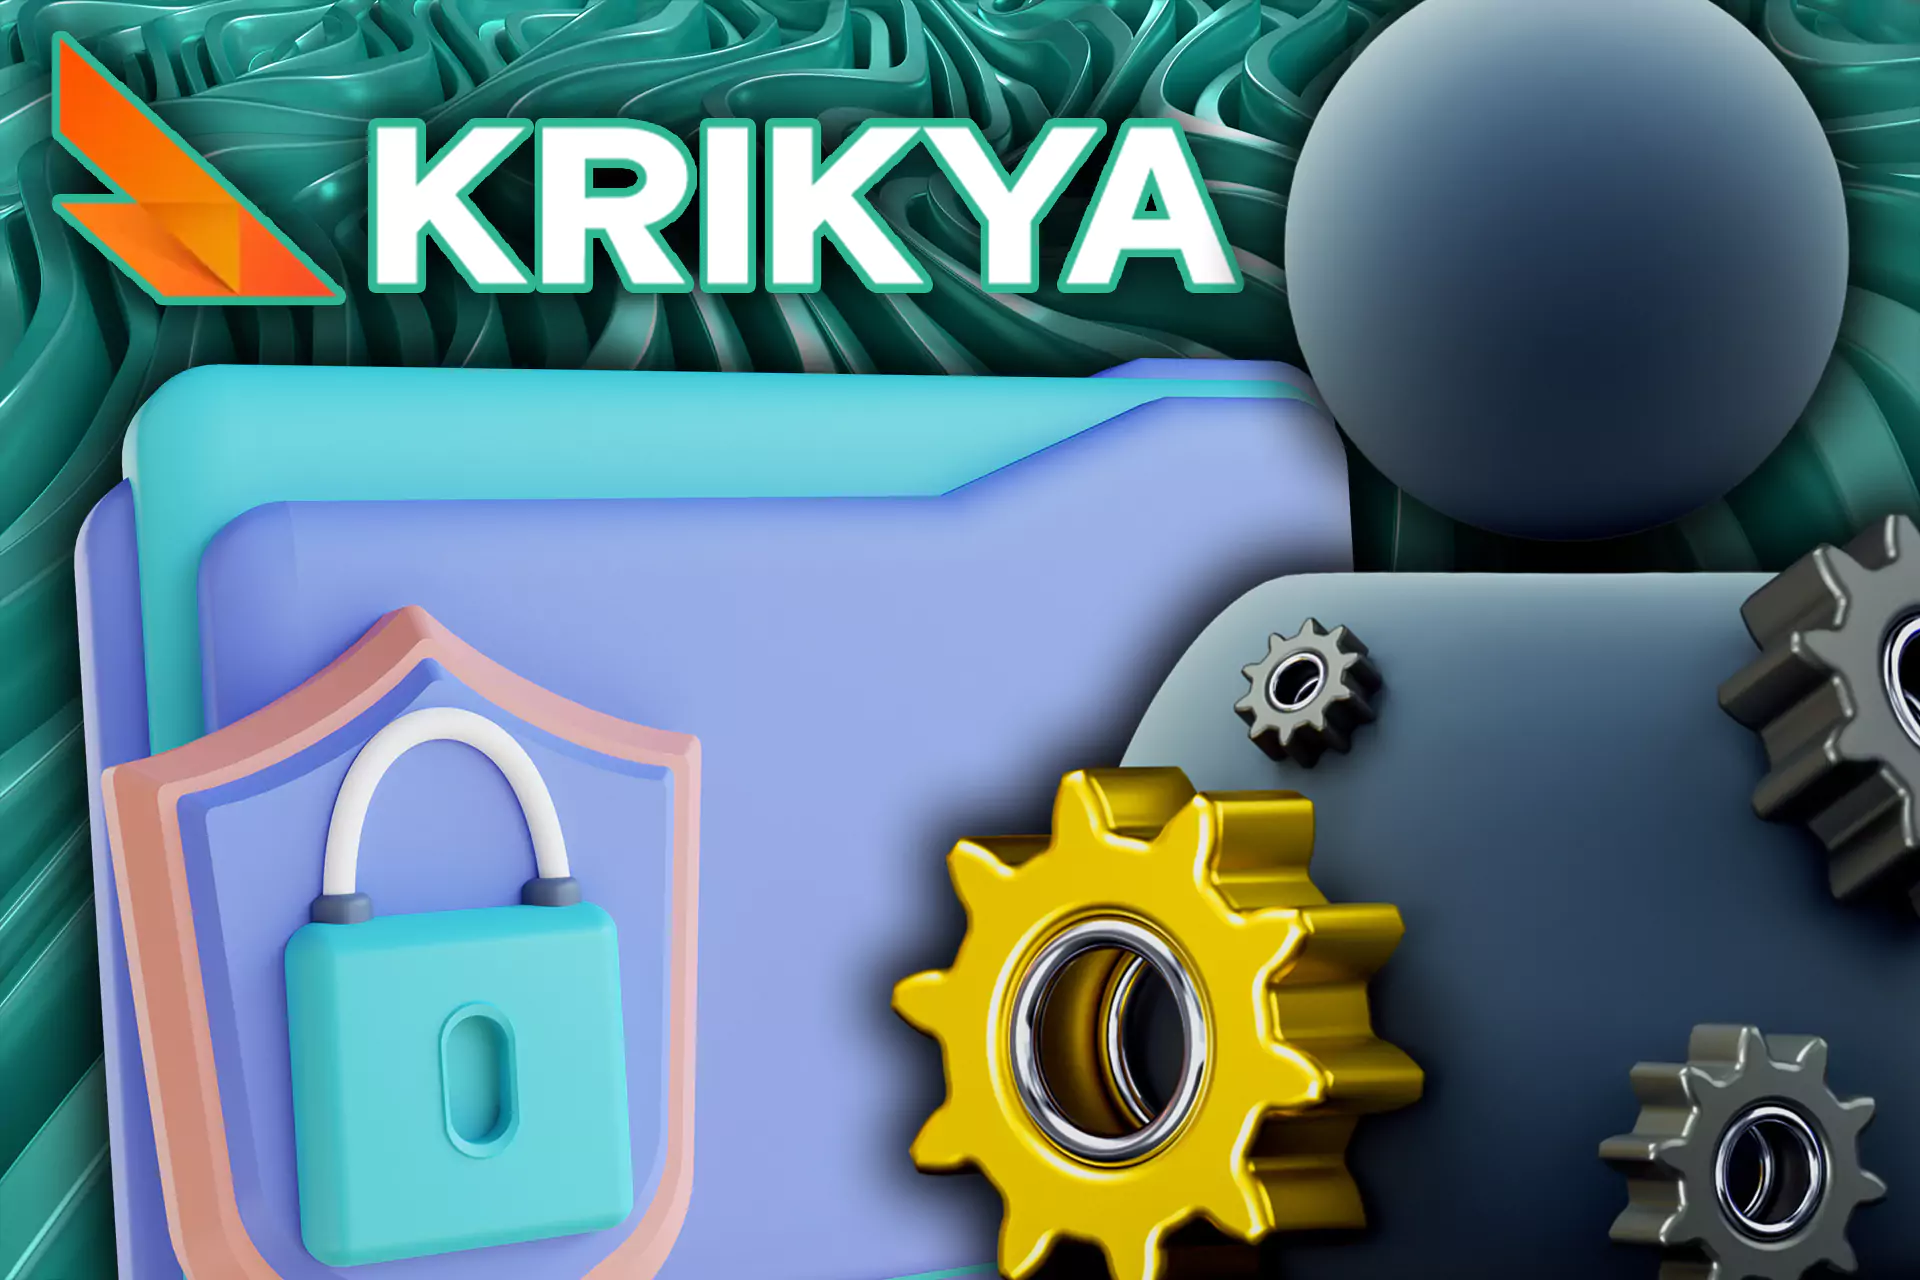 Krikya intstalling the new security sistems in time.